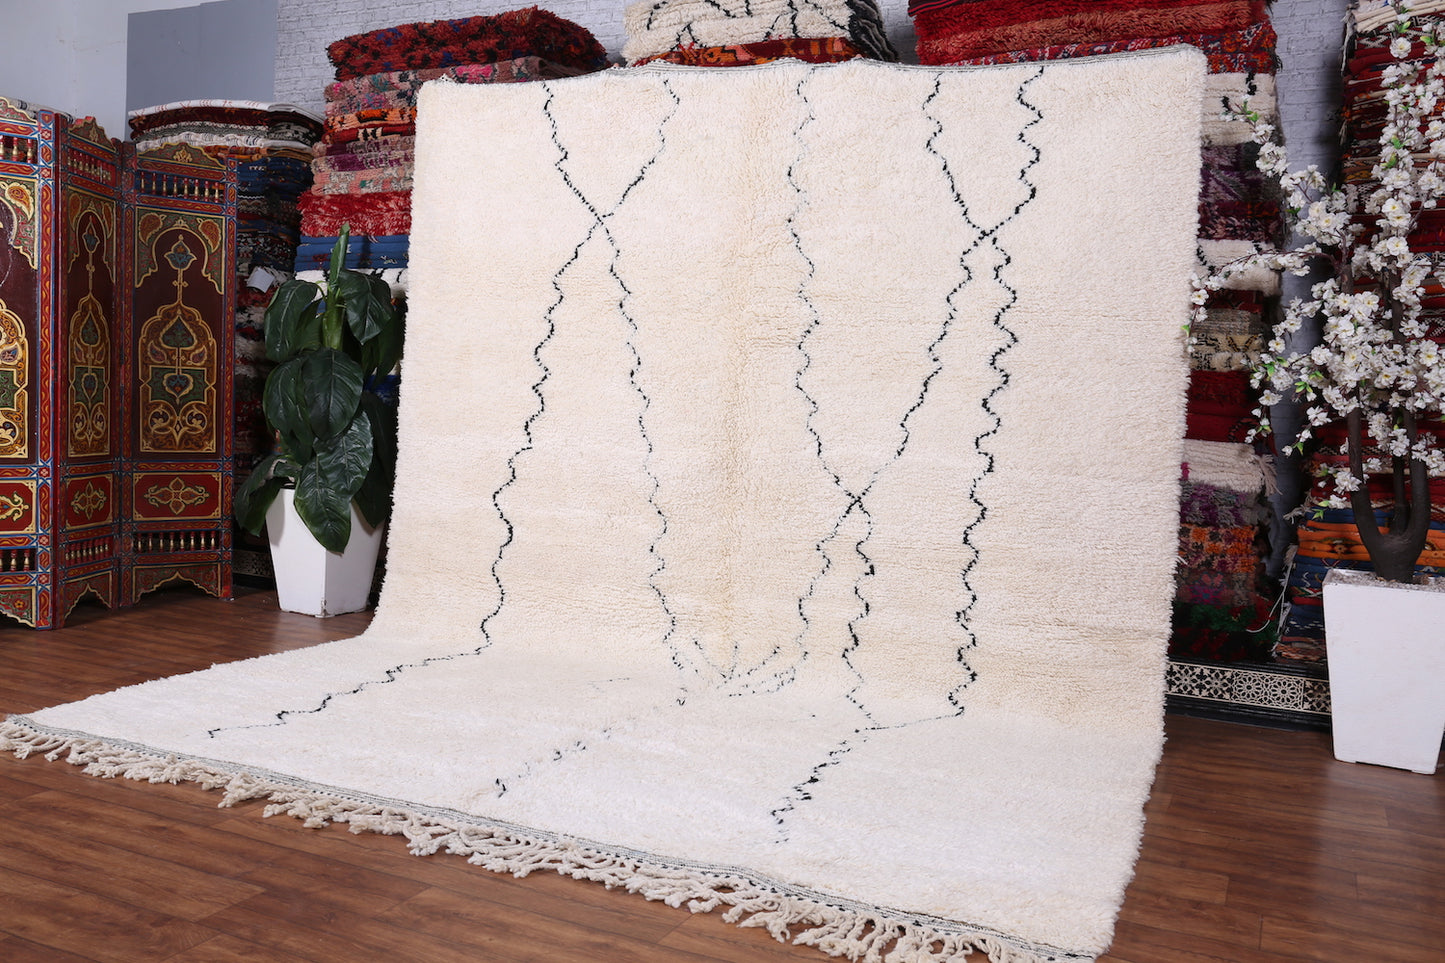 Custom Moroccan carpet - All wool beni ourain rug